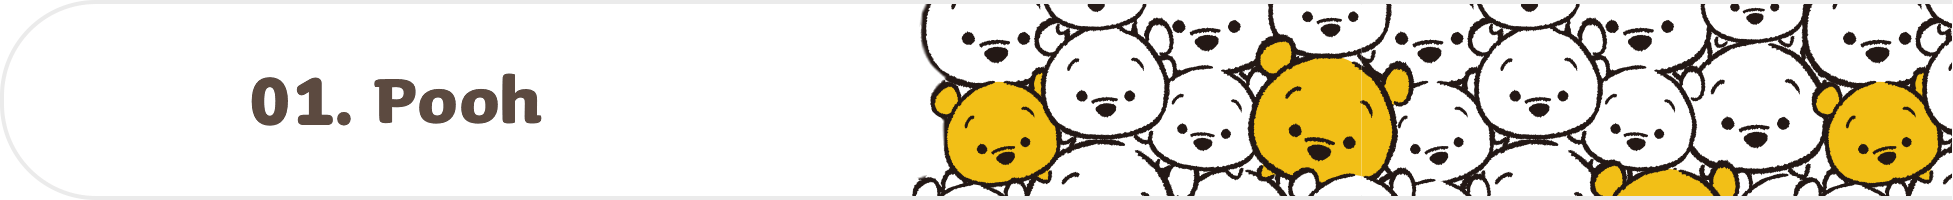 01. Pooh